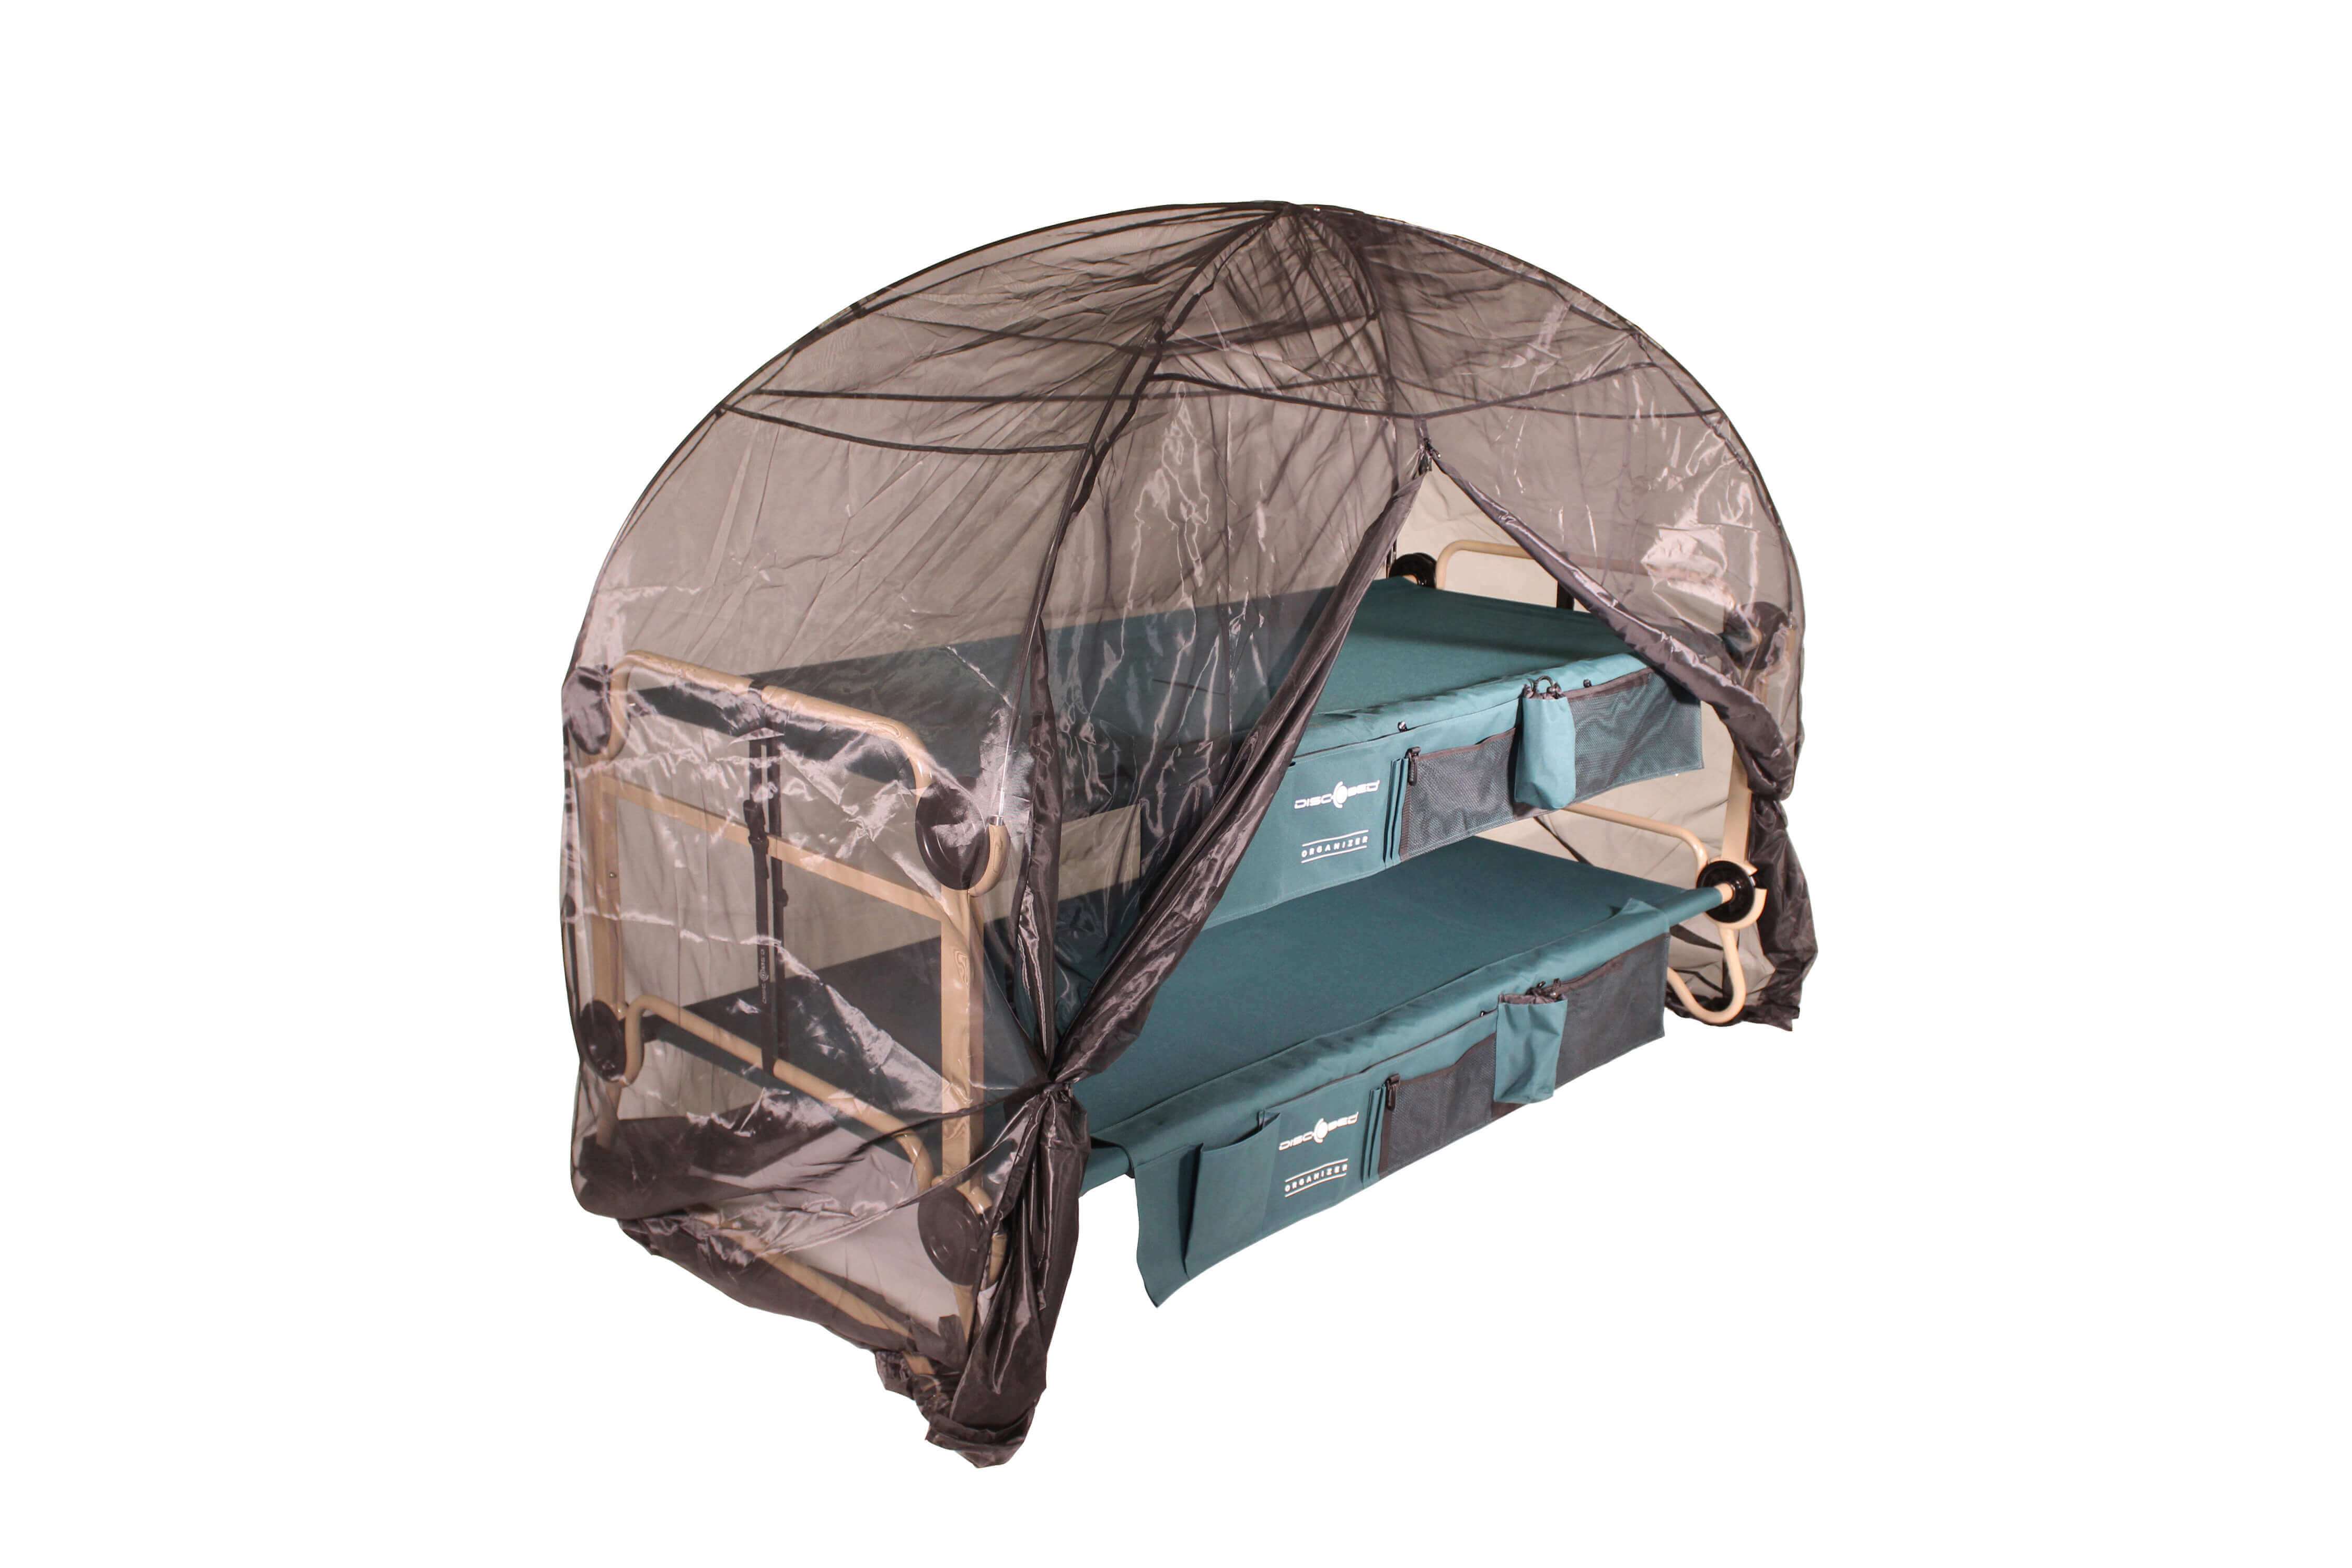 Portable bunk beds cot bunk beds